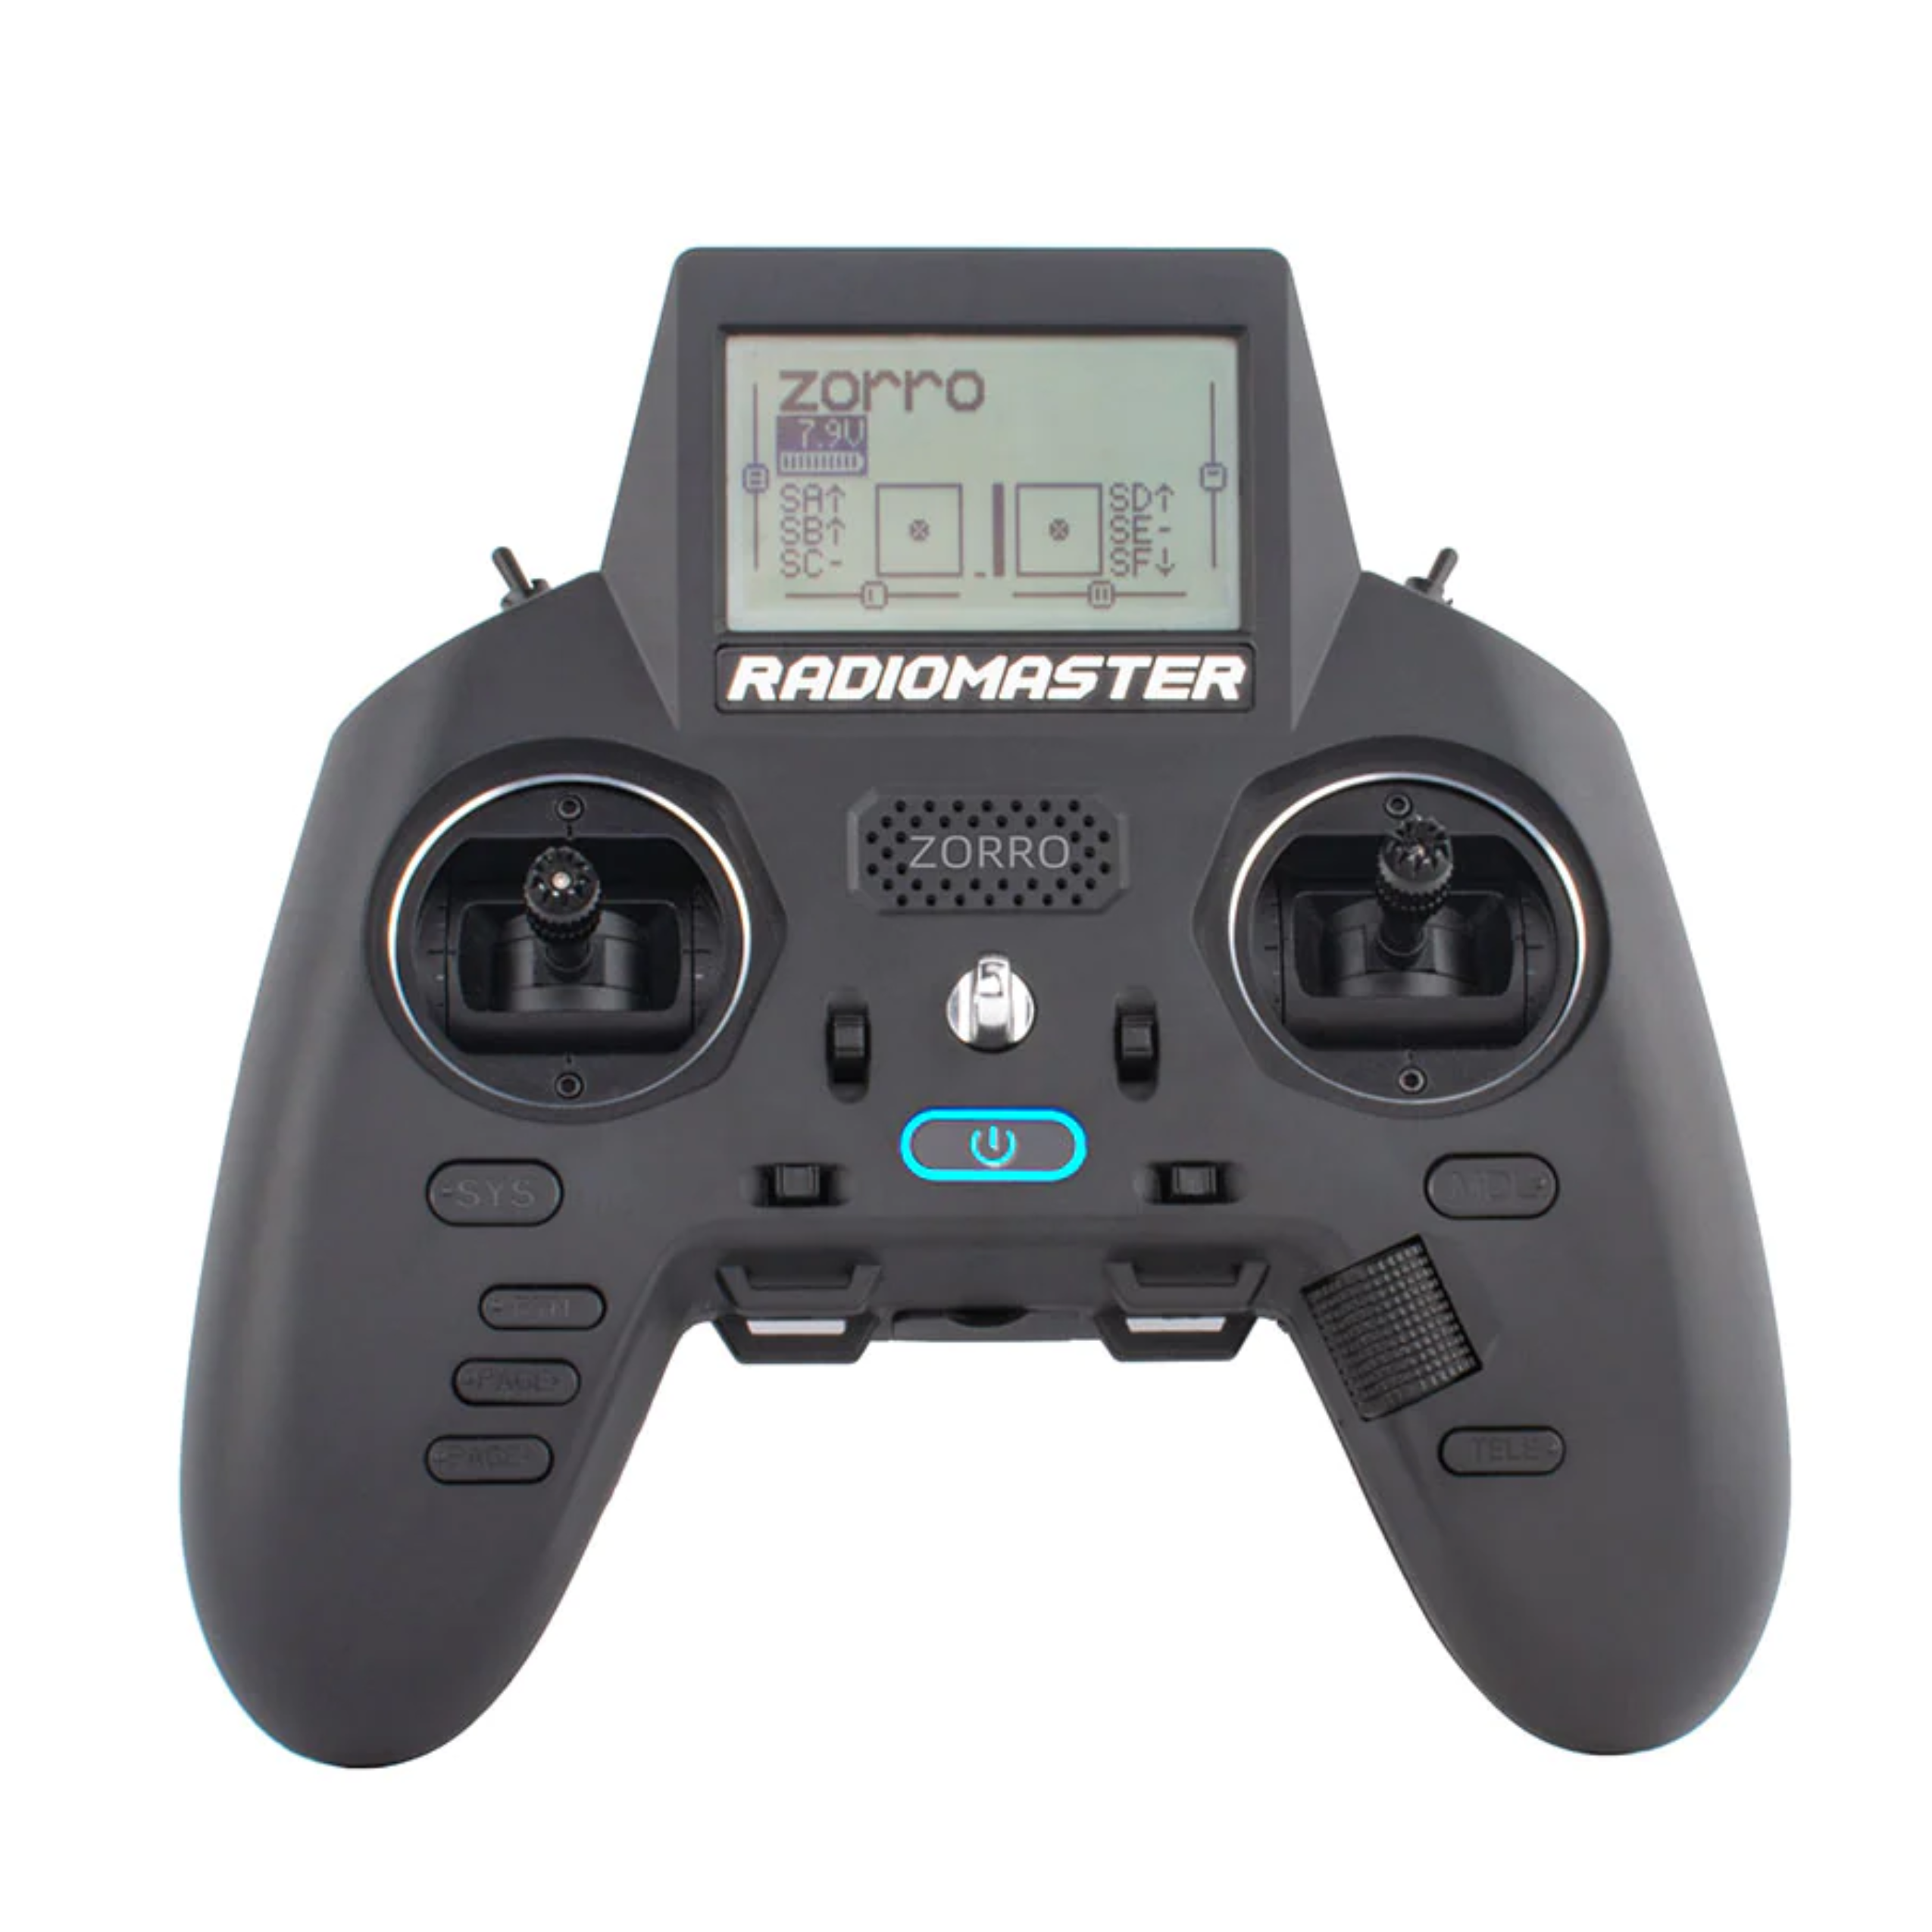 Radiomaster Zorro Radio Controller CC2500 With Batteries - DroneLabs.ca